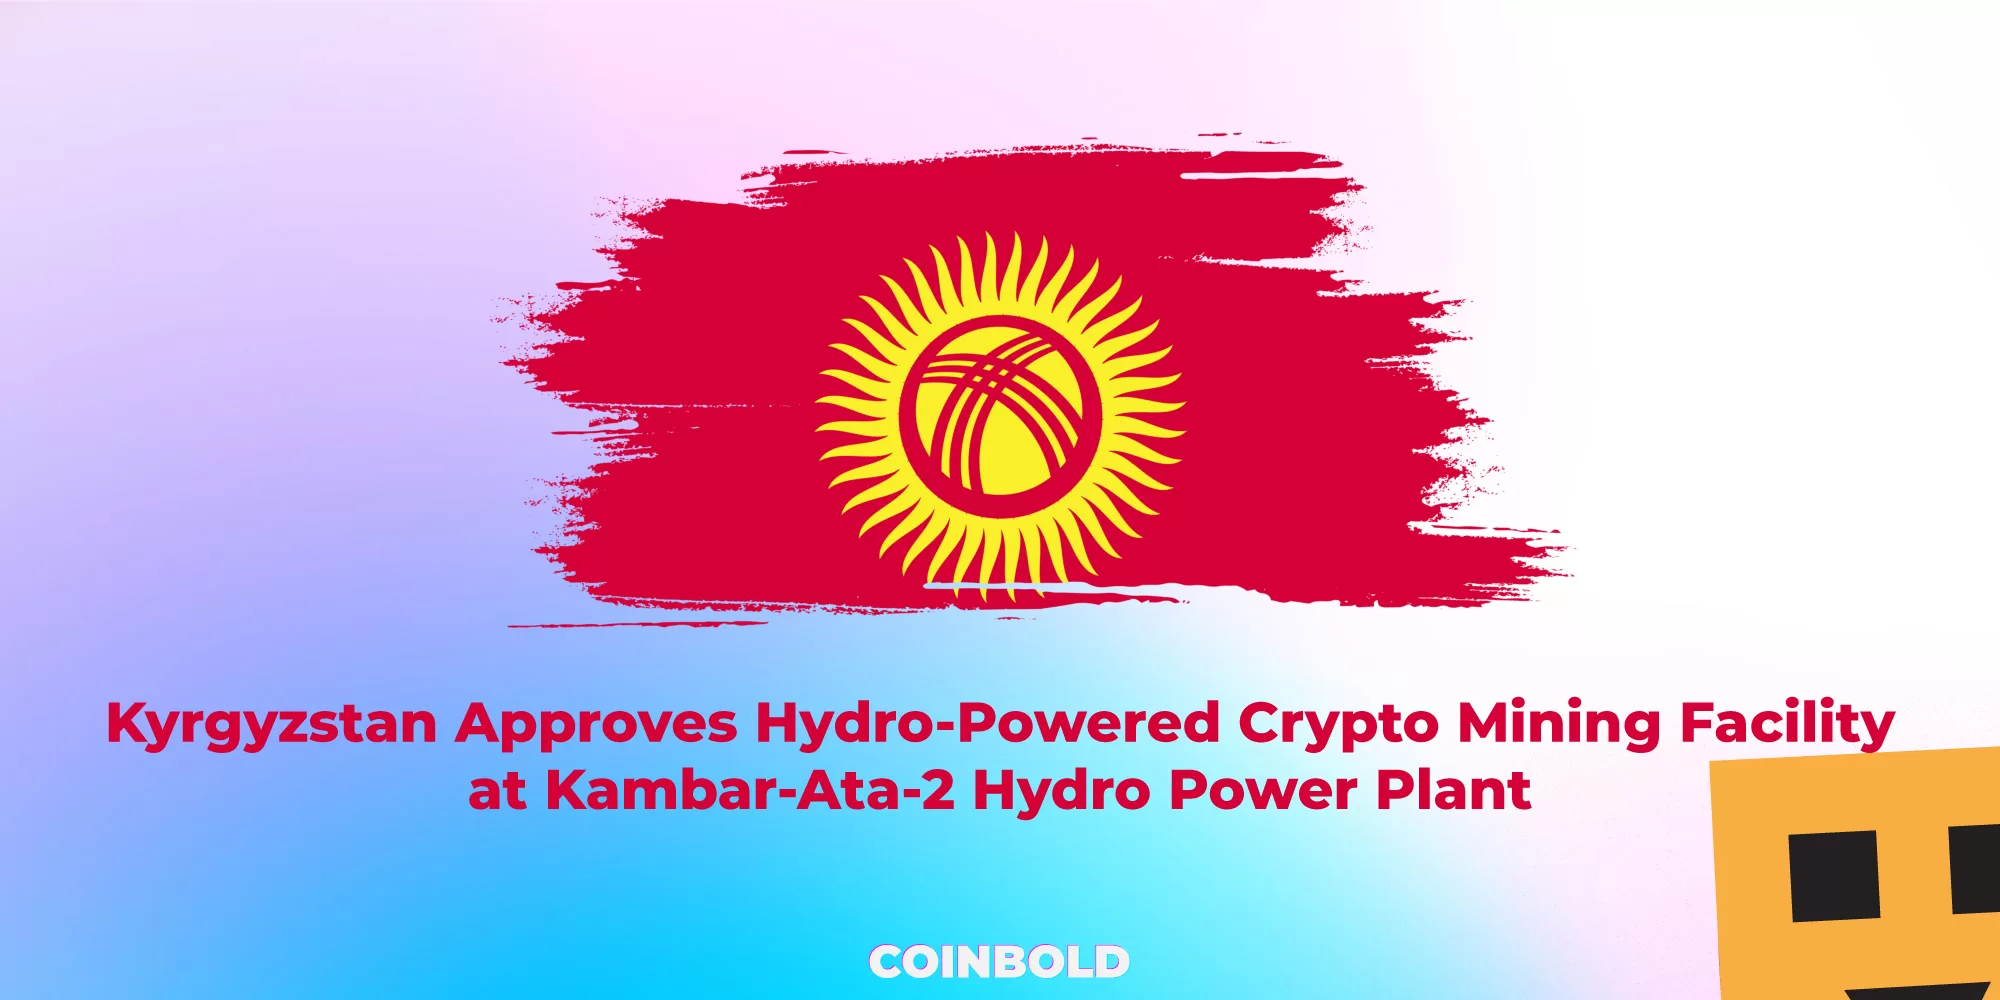 Kyrgyzstan Approves Hydro-Powered Crypto Mining Facility at Kambar-Ata-2 Hydro Power Plant